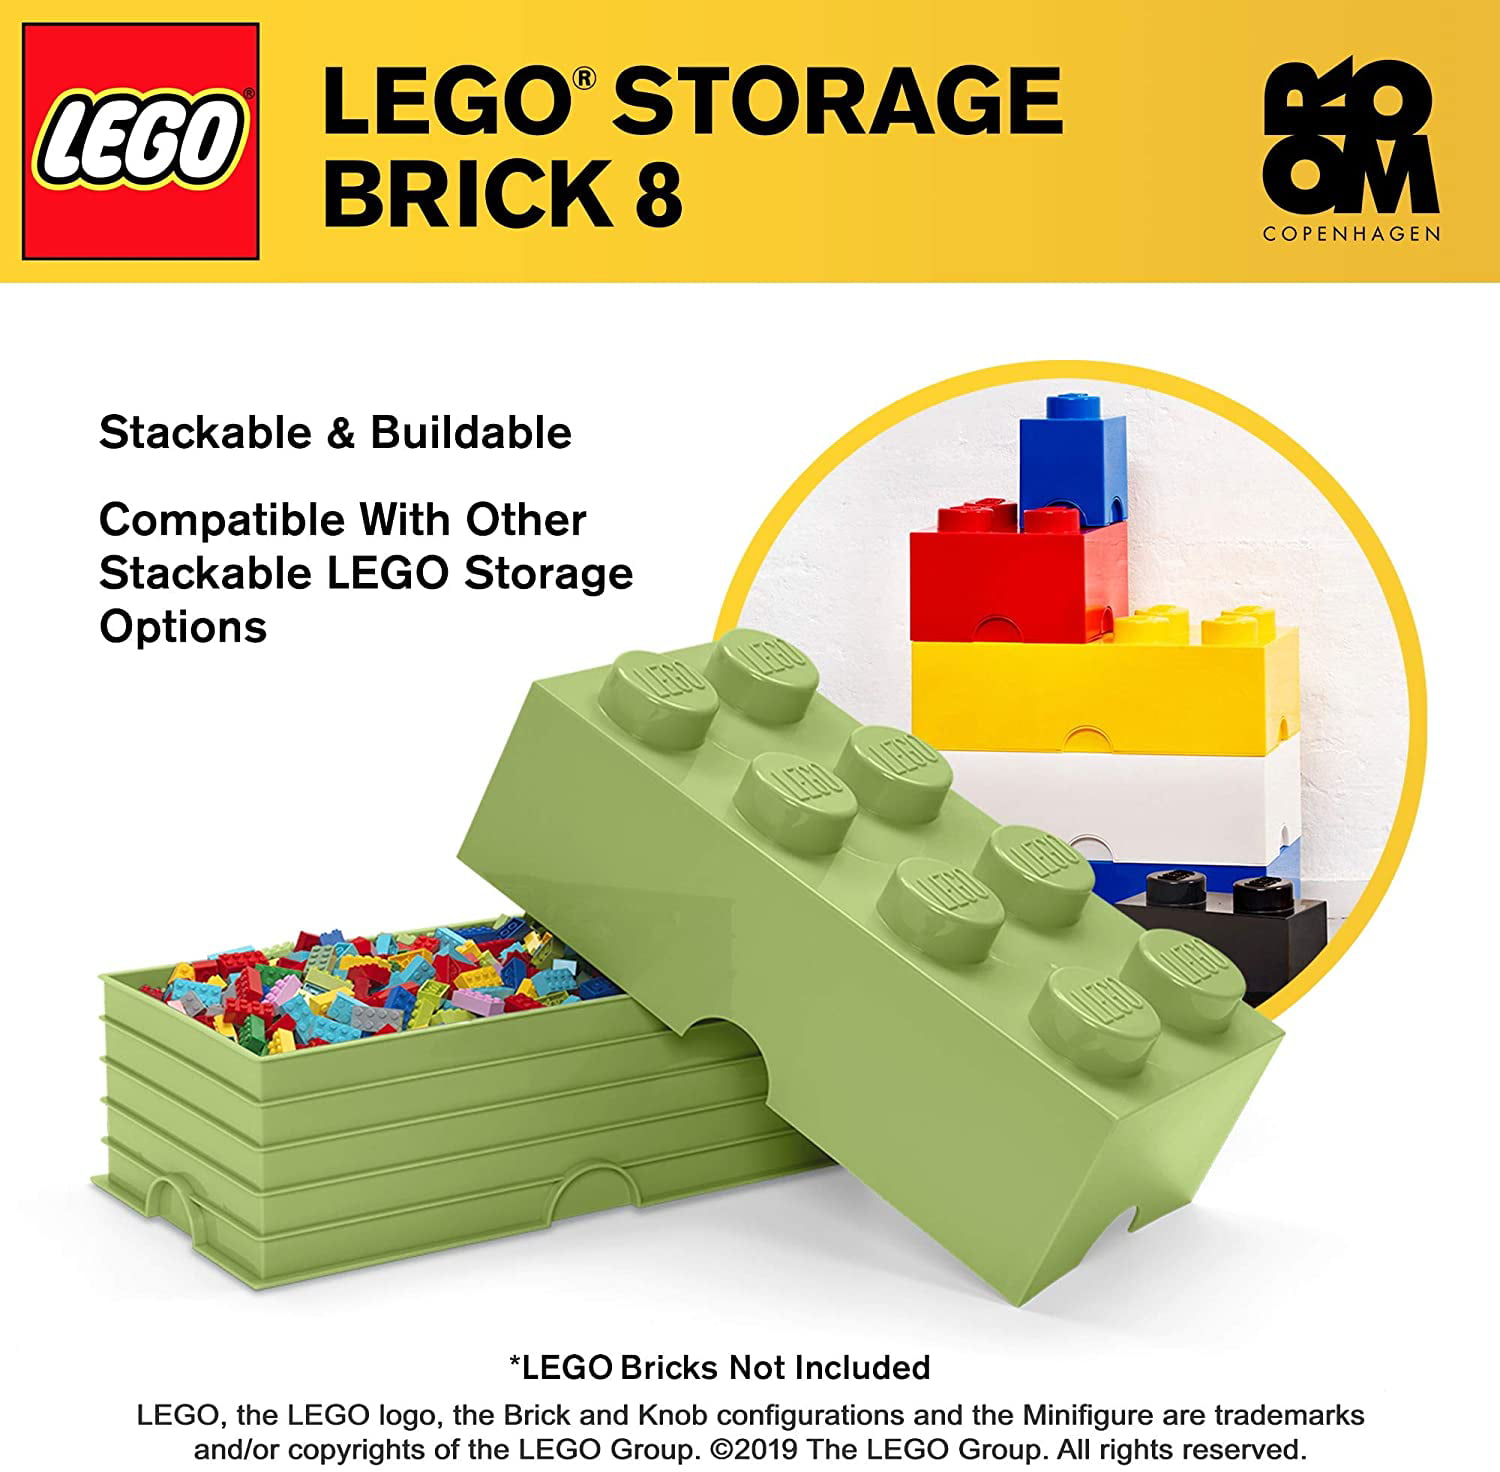 Stackable LEGO Brick Sorter / Sorting Box by Casadebricks.com